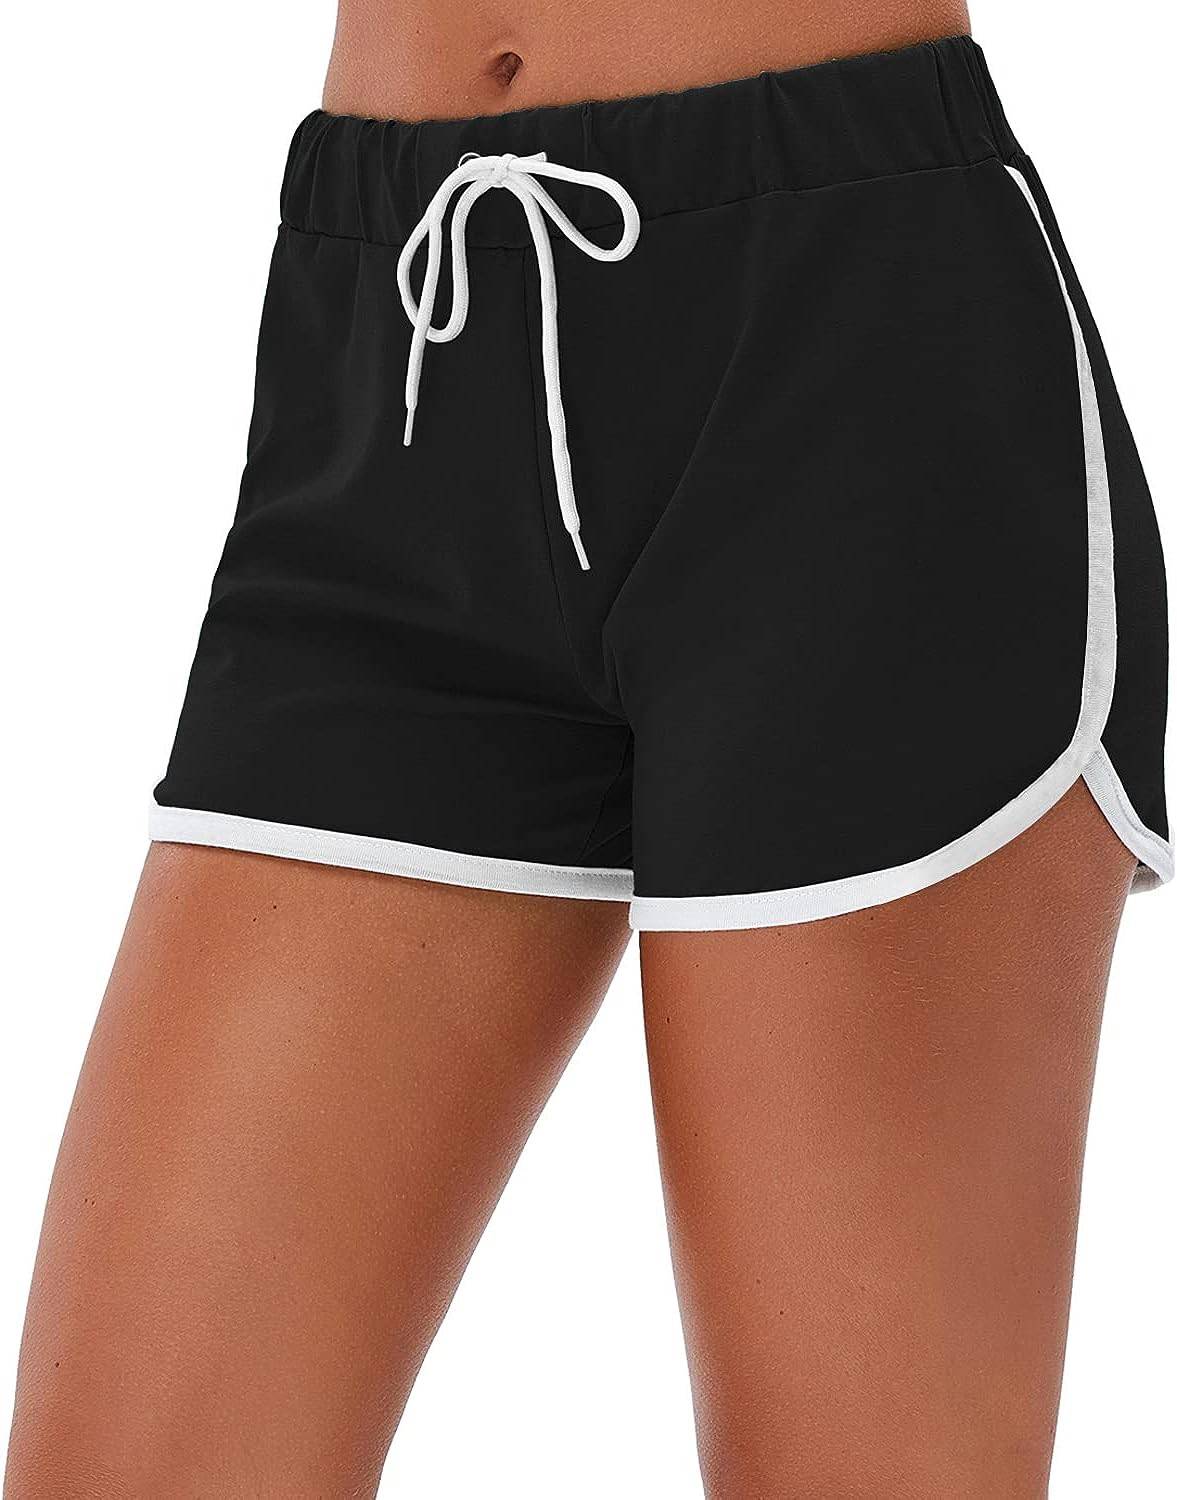 Ladies Shorts - Buy Denim, Cotton & Gym Shorts for Women Online